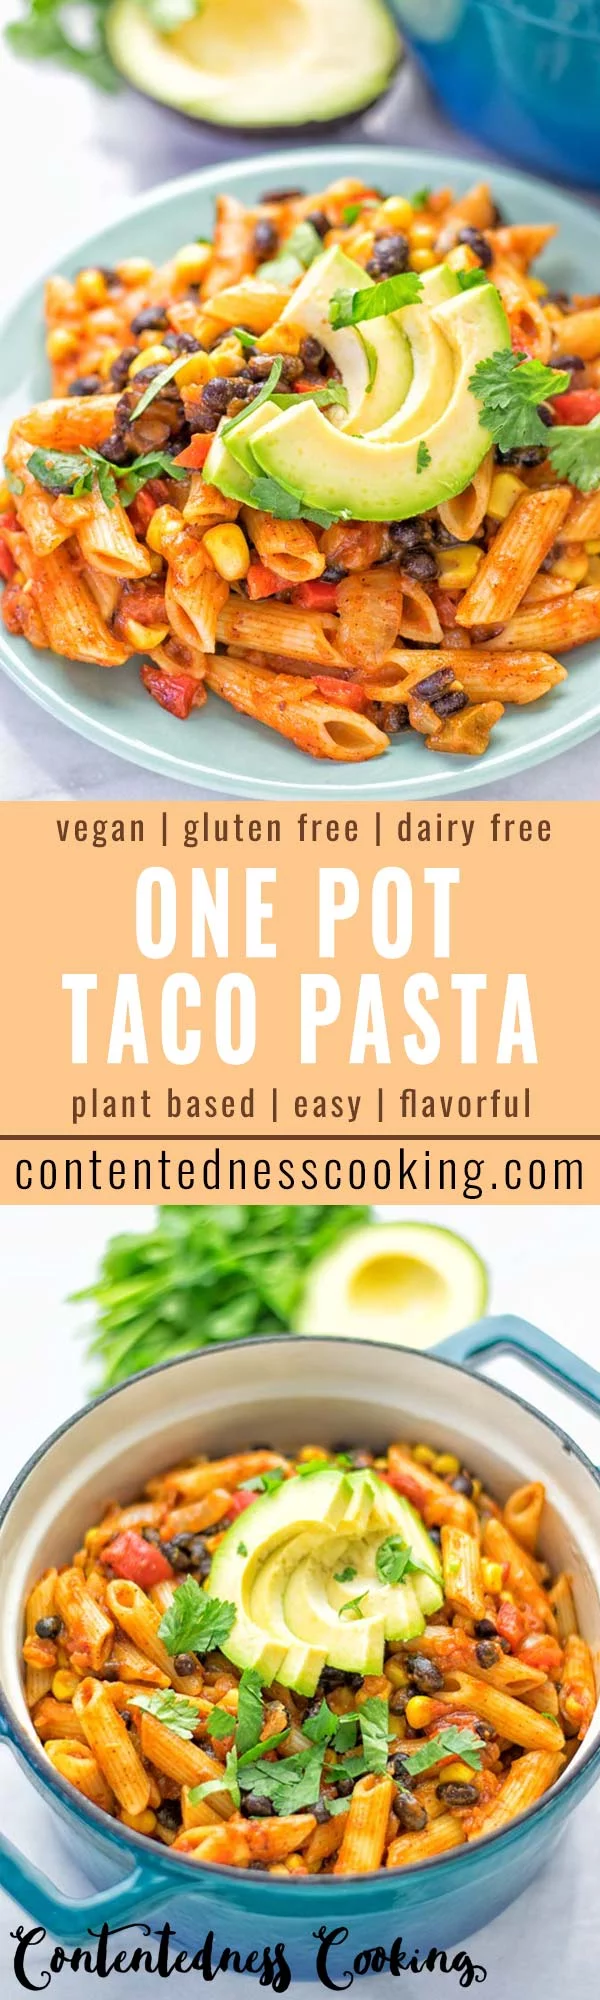 One Pot Taco Pasta | #vegan #glutenfree #dairyfree #plantbased #contentednesscooking